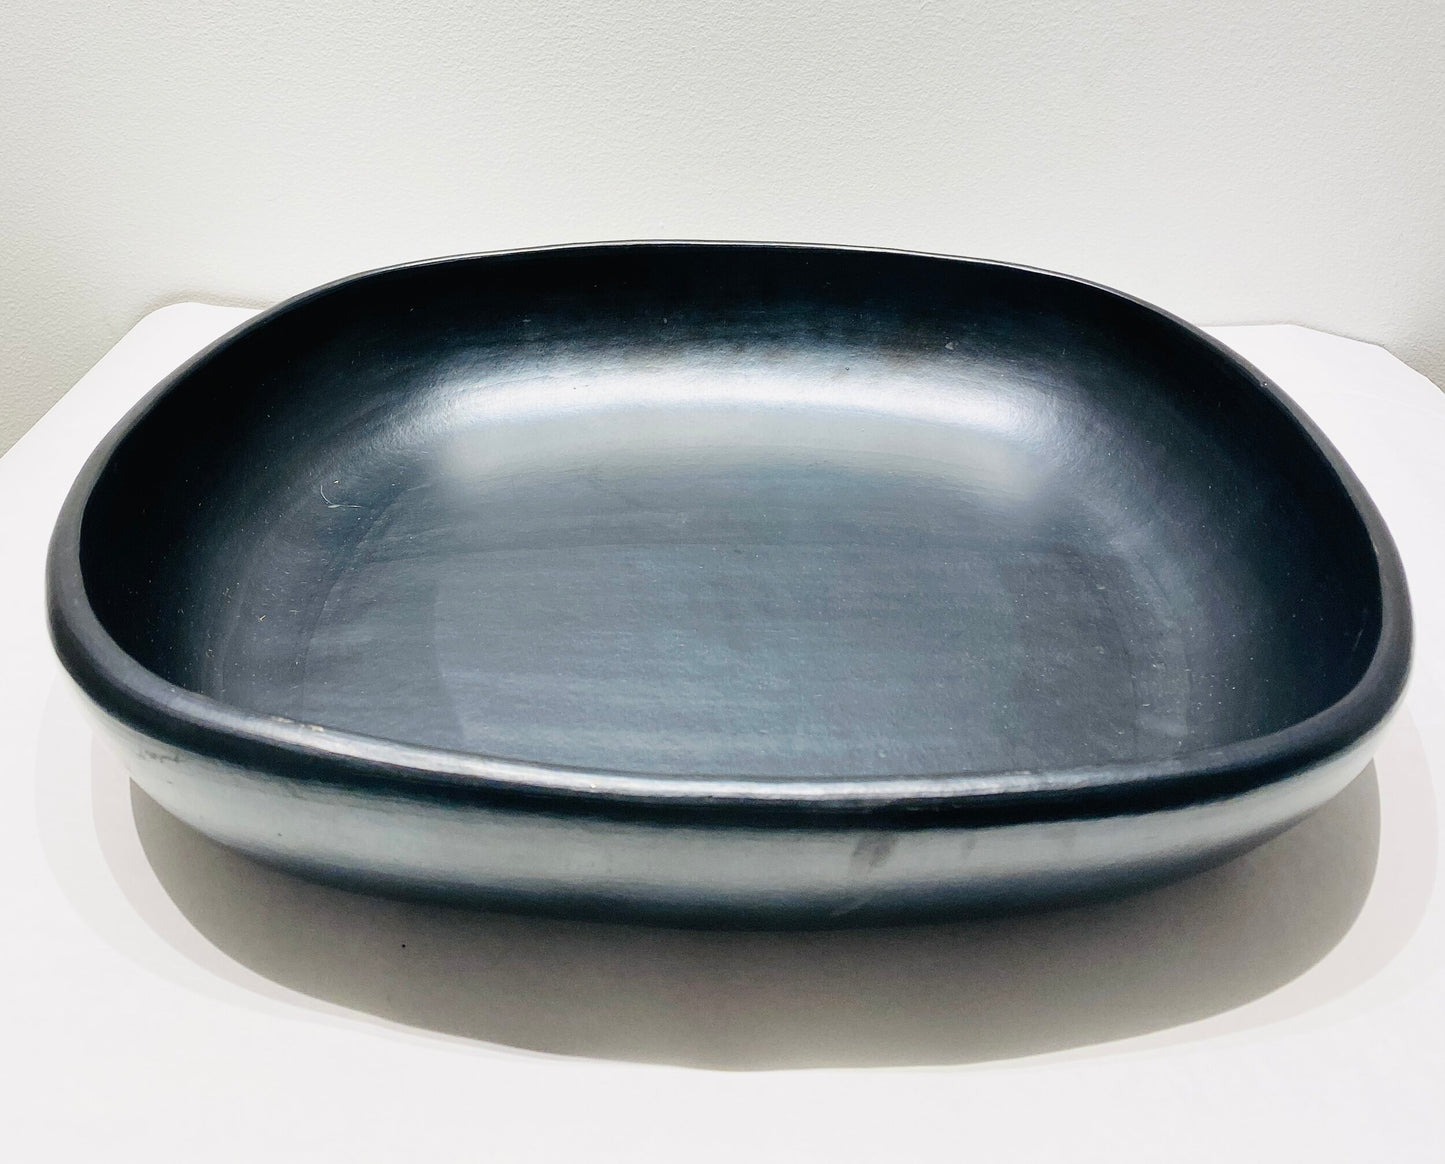 Columbian Black Clay Ceramic Nesting Platters - 3 sizes